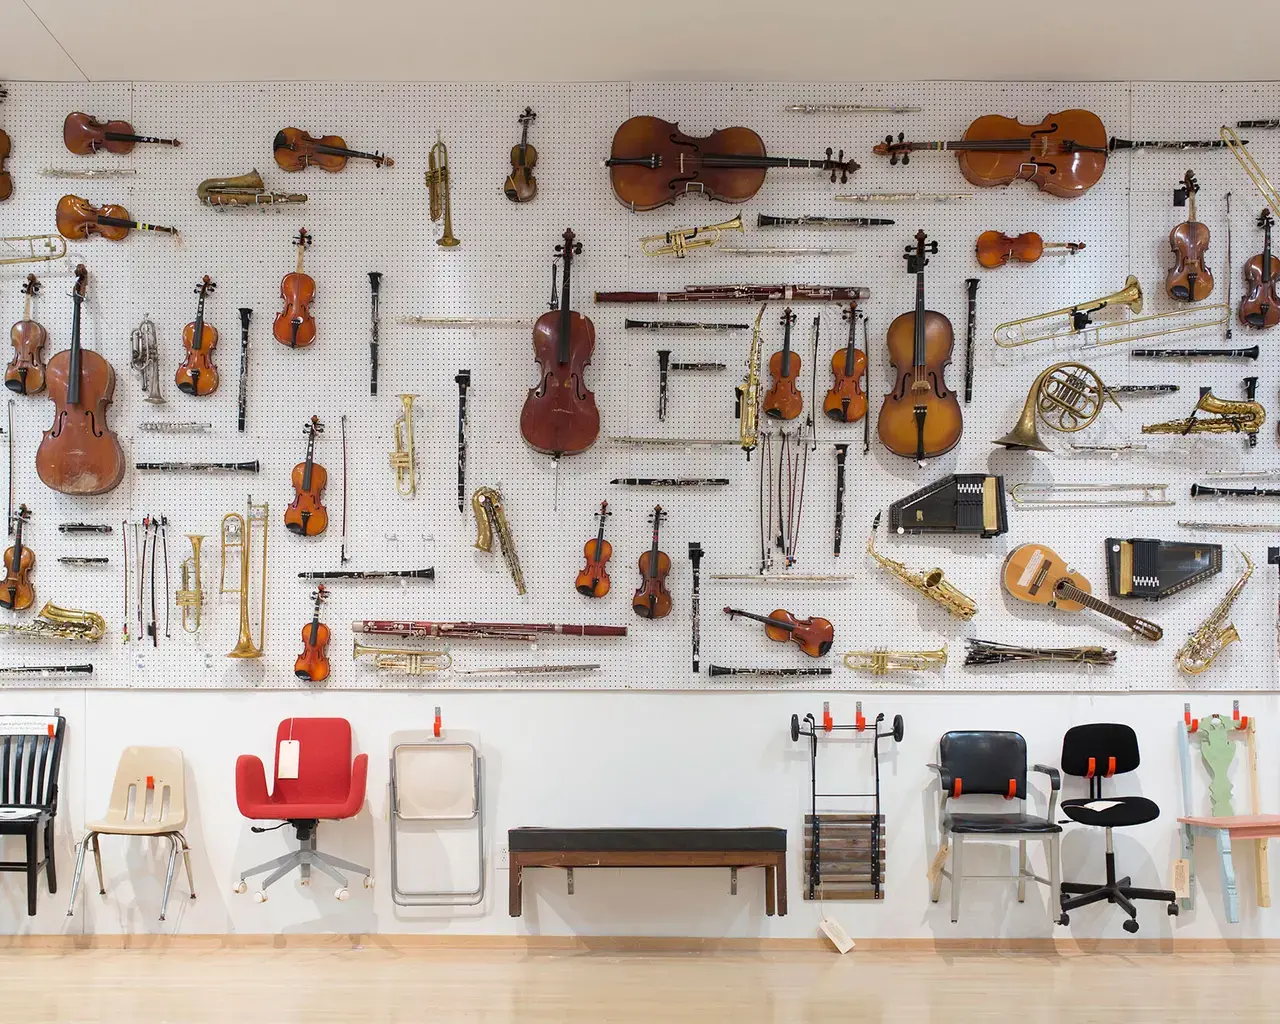 Wall installation of broken instruments from Philadelphia schools, Temple Contemporary. Photo by Haley Adair.